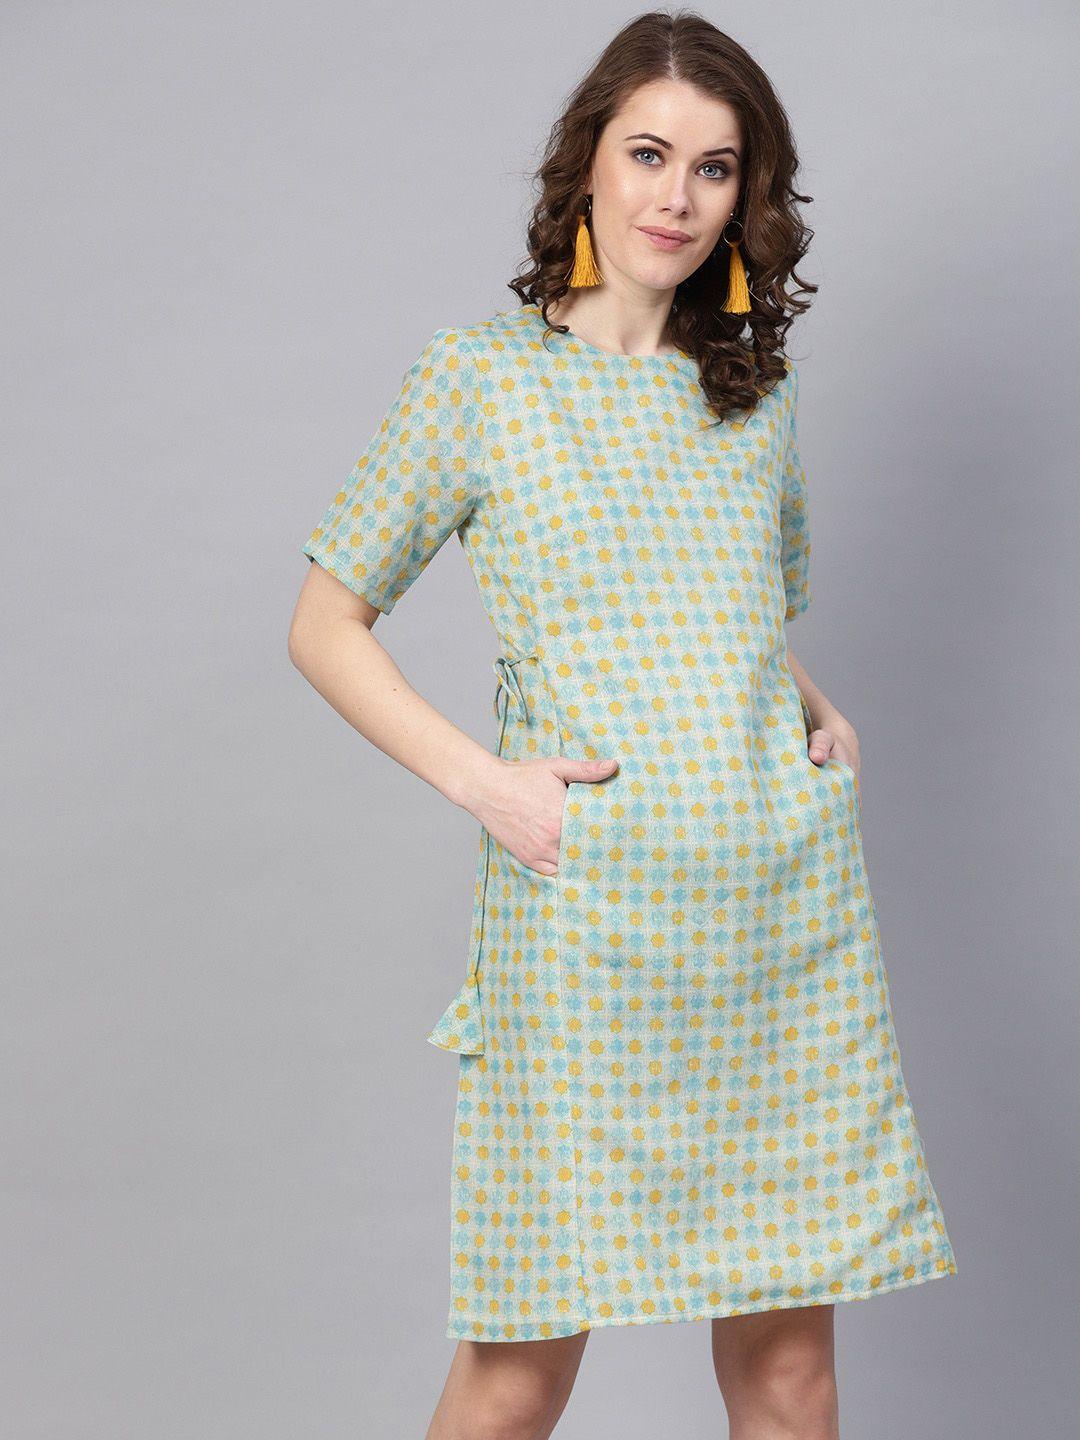 rare sea green & yellow ethnic motif printed a-line dress